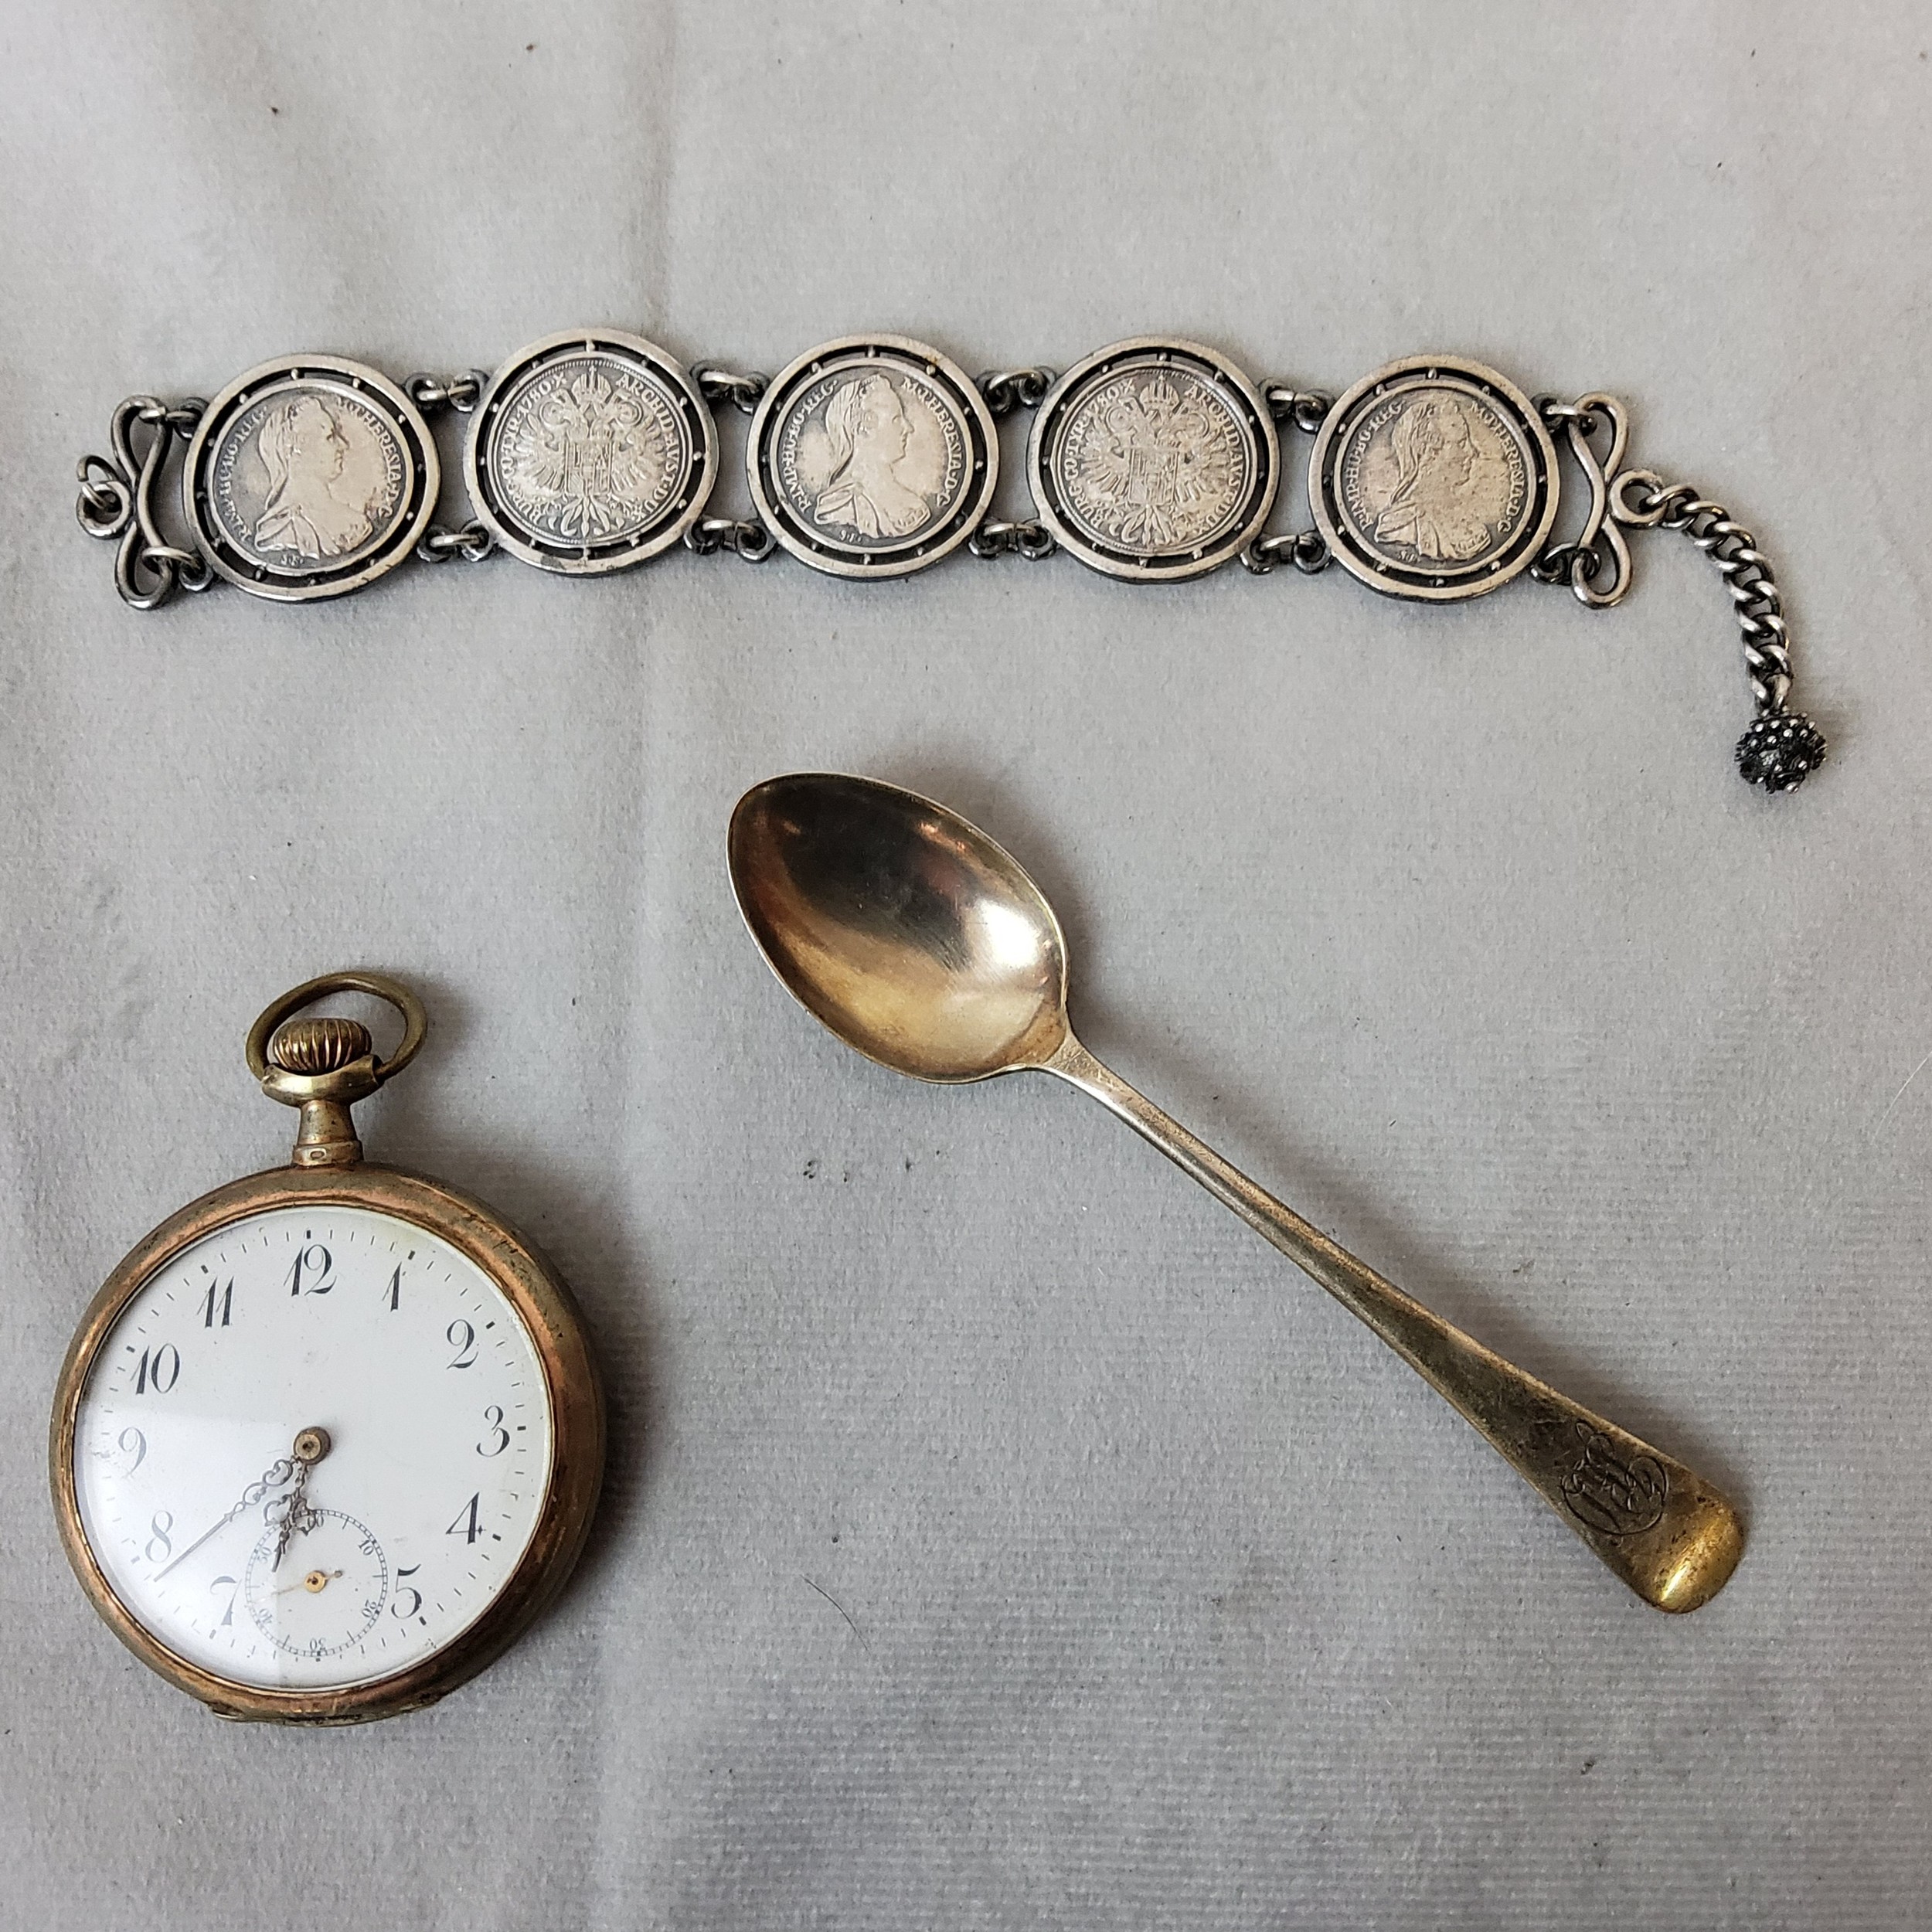 Gentleman's Effects - A Continental silver .800 grade pocket watch marked Remontoir Ancre Ligne